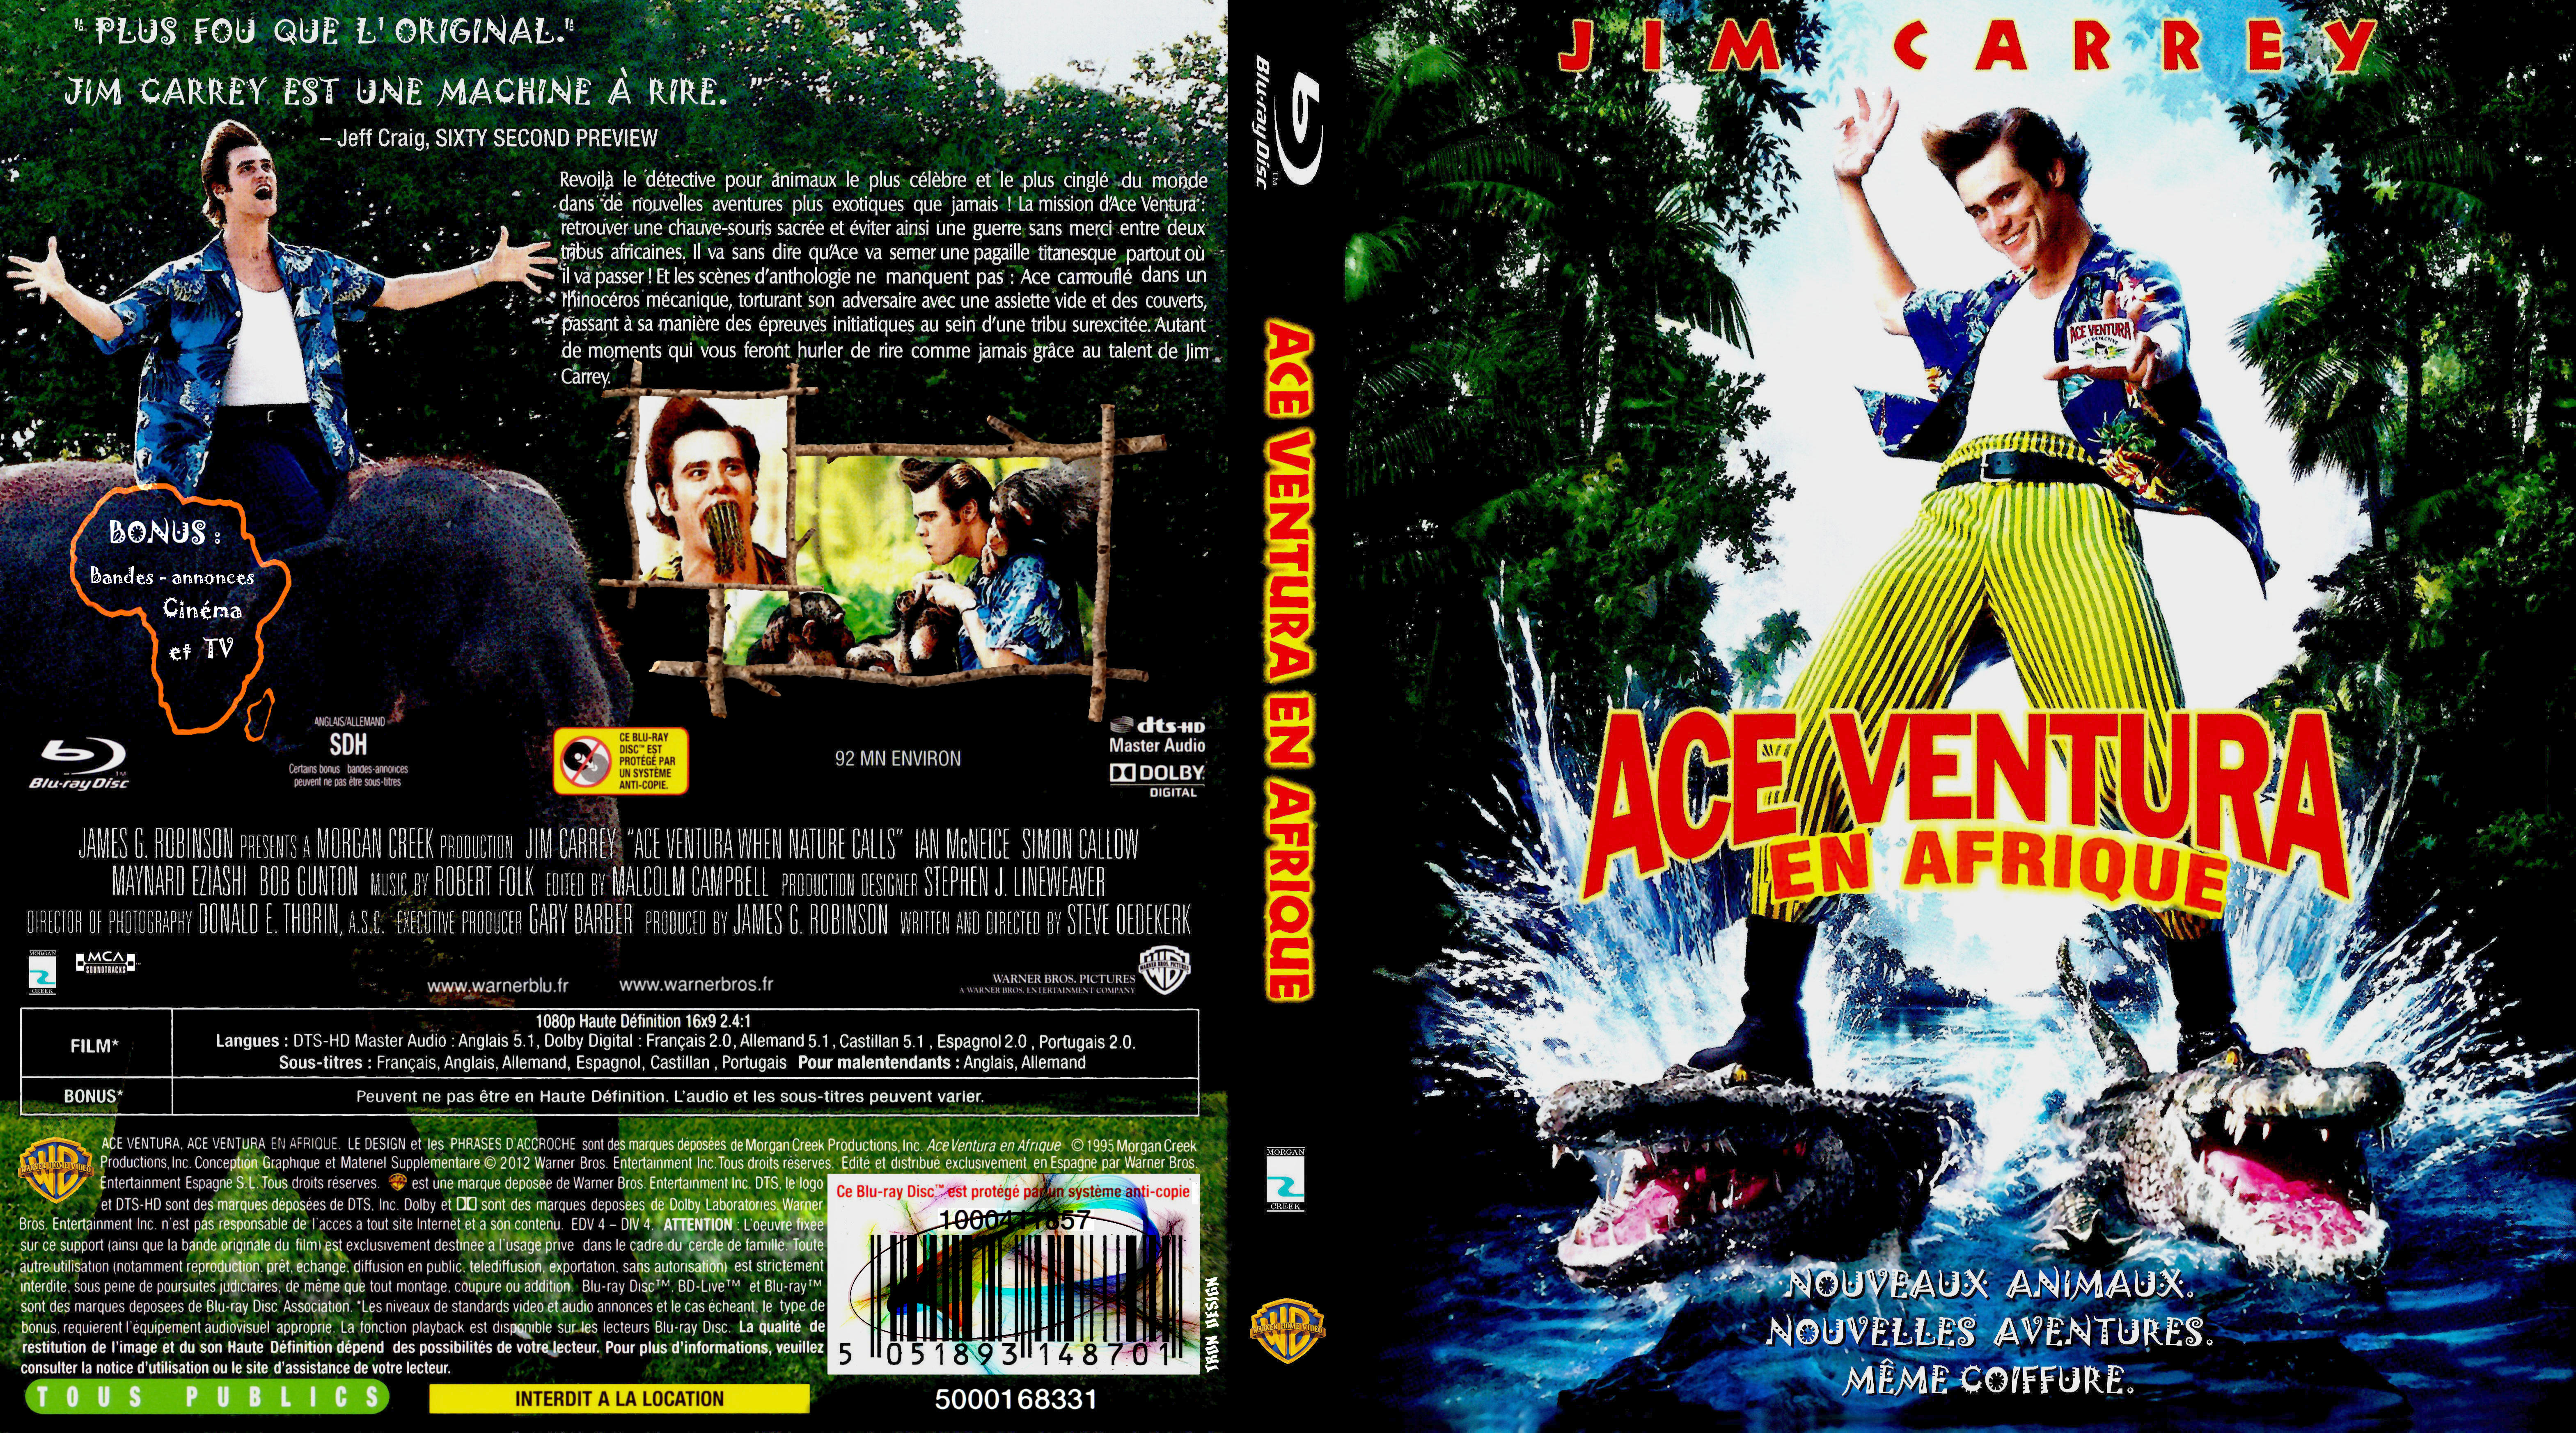 Jaquette DVD Ace Ventura en afrique custom (BLU-RAY)